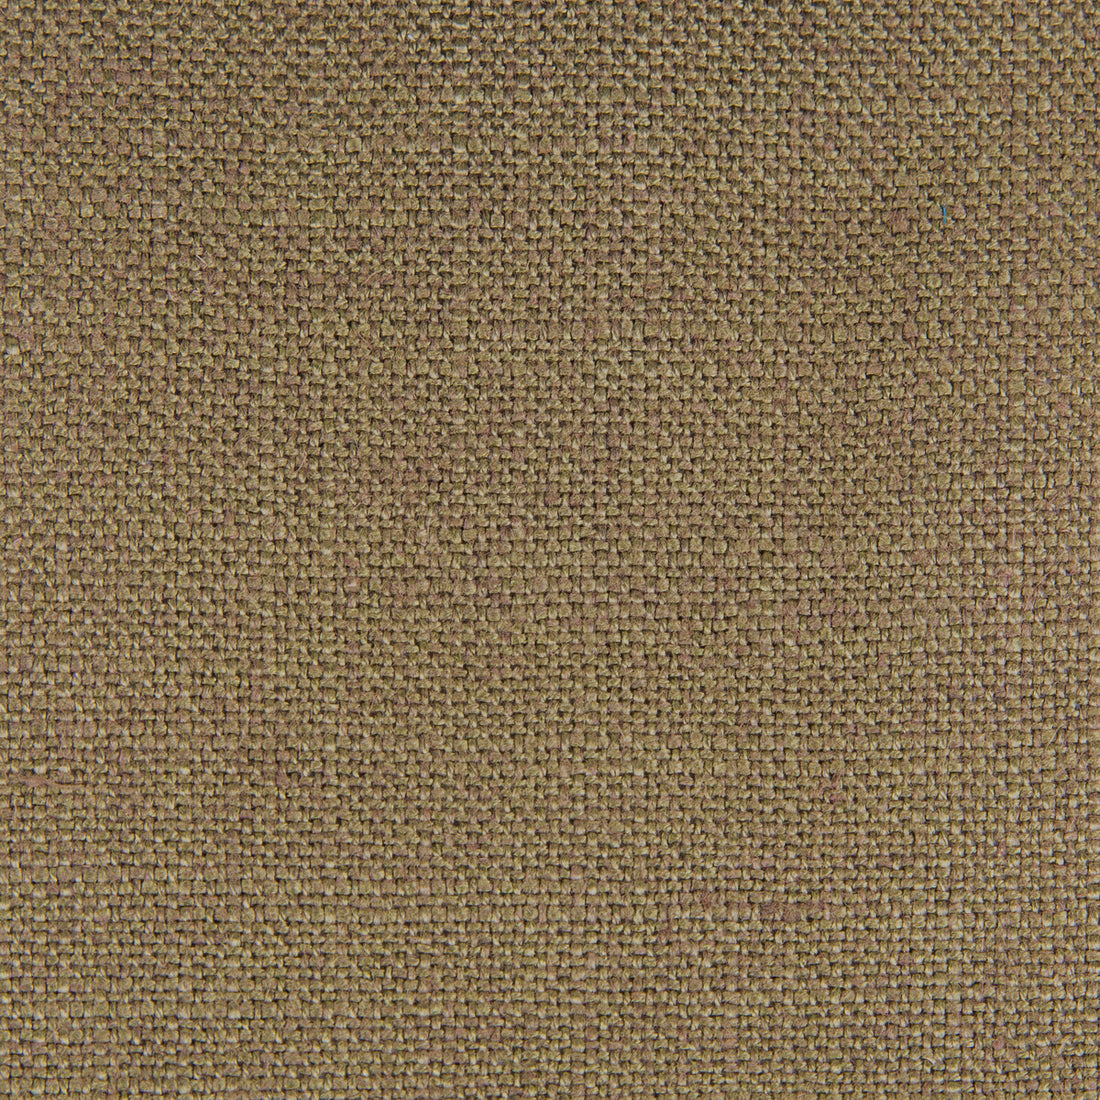 Peru fabric in kaki color - pattern GDT5548.011.0 - by Gaston y Daniela in the Gaston Nuevo Mundo collection